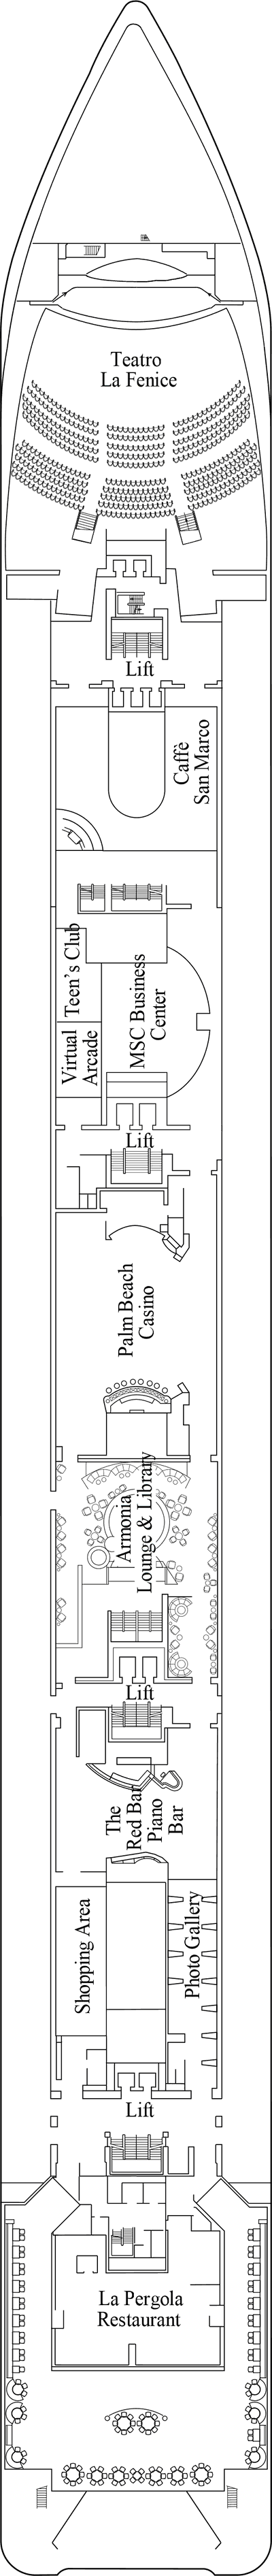 MSC Armonia - Decksplan Deck 6